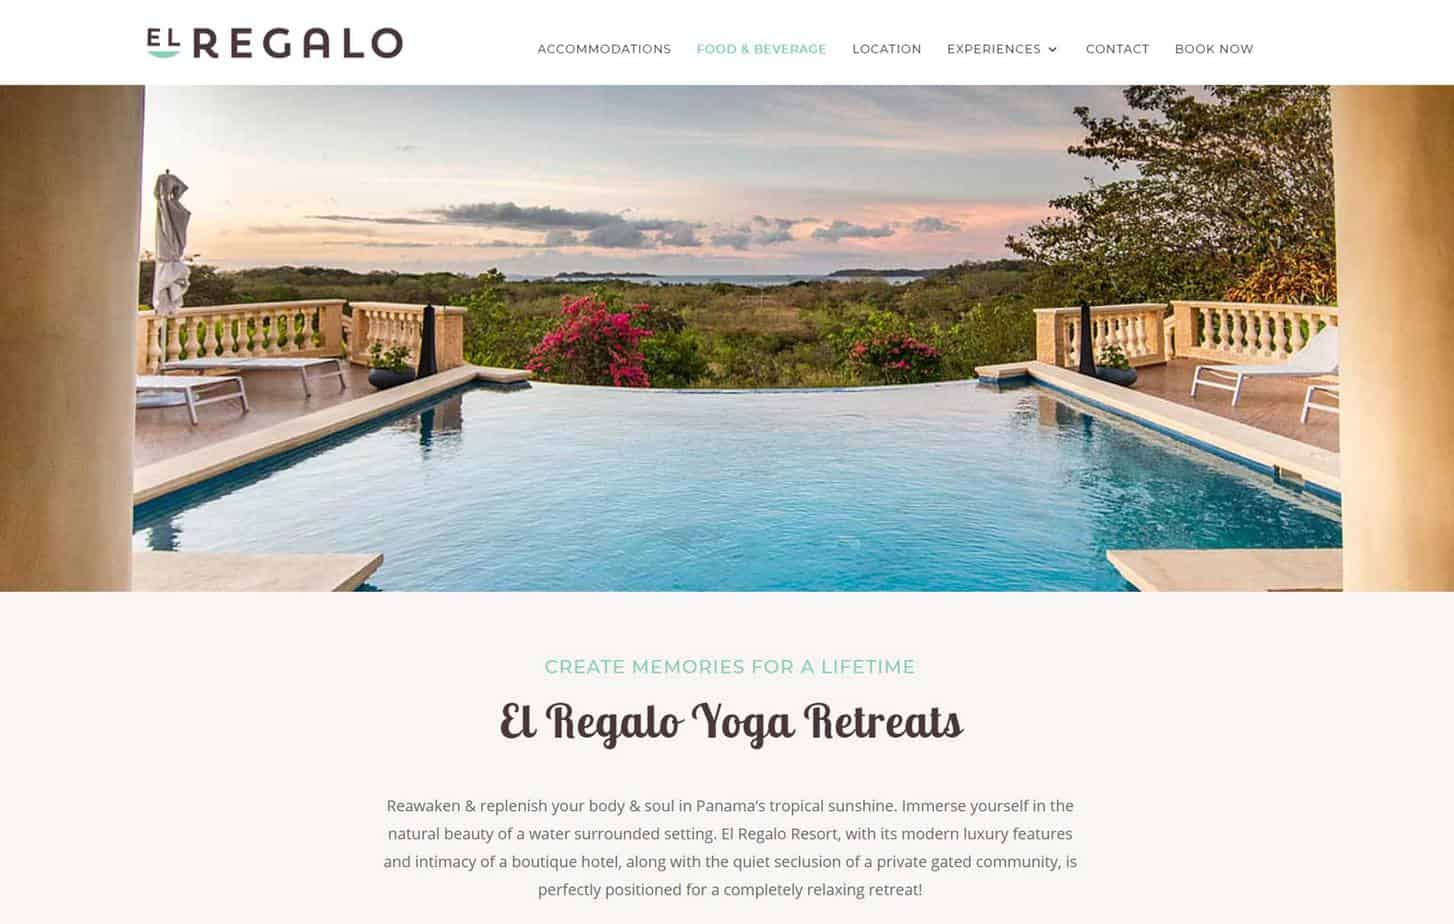 El Regalo yoga retreats